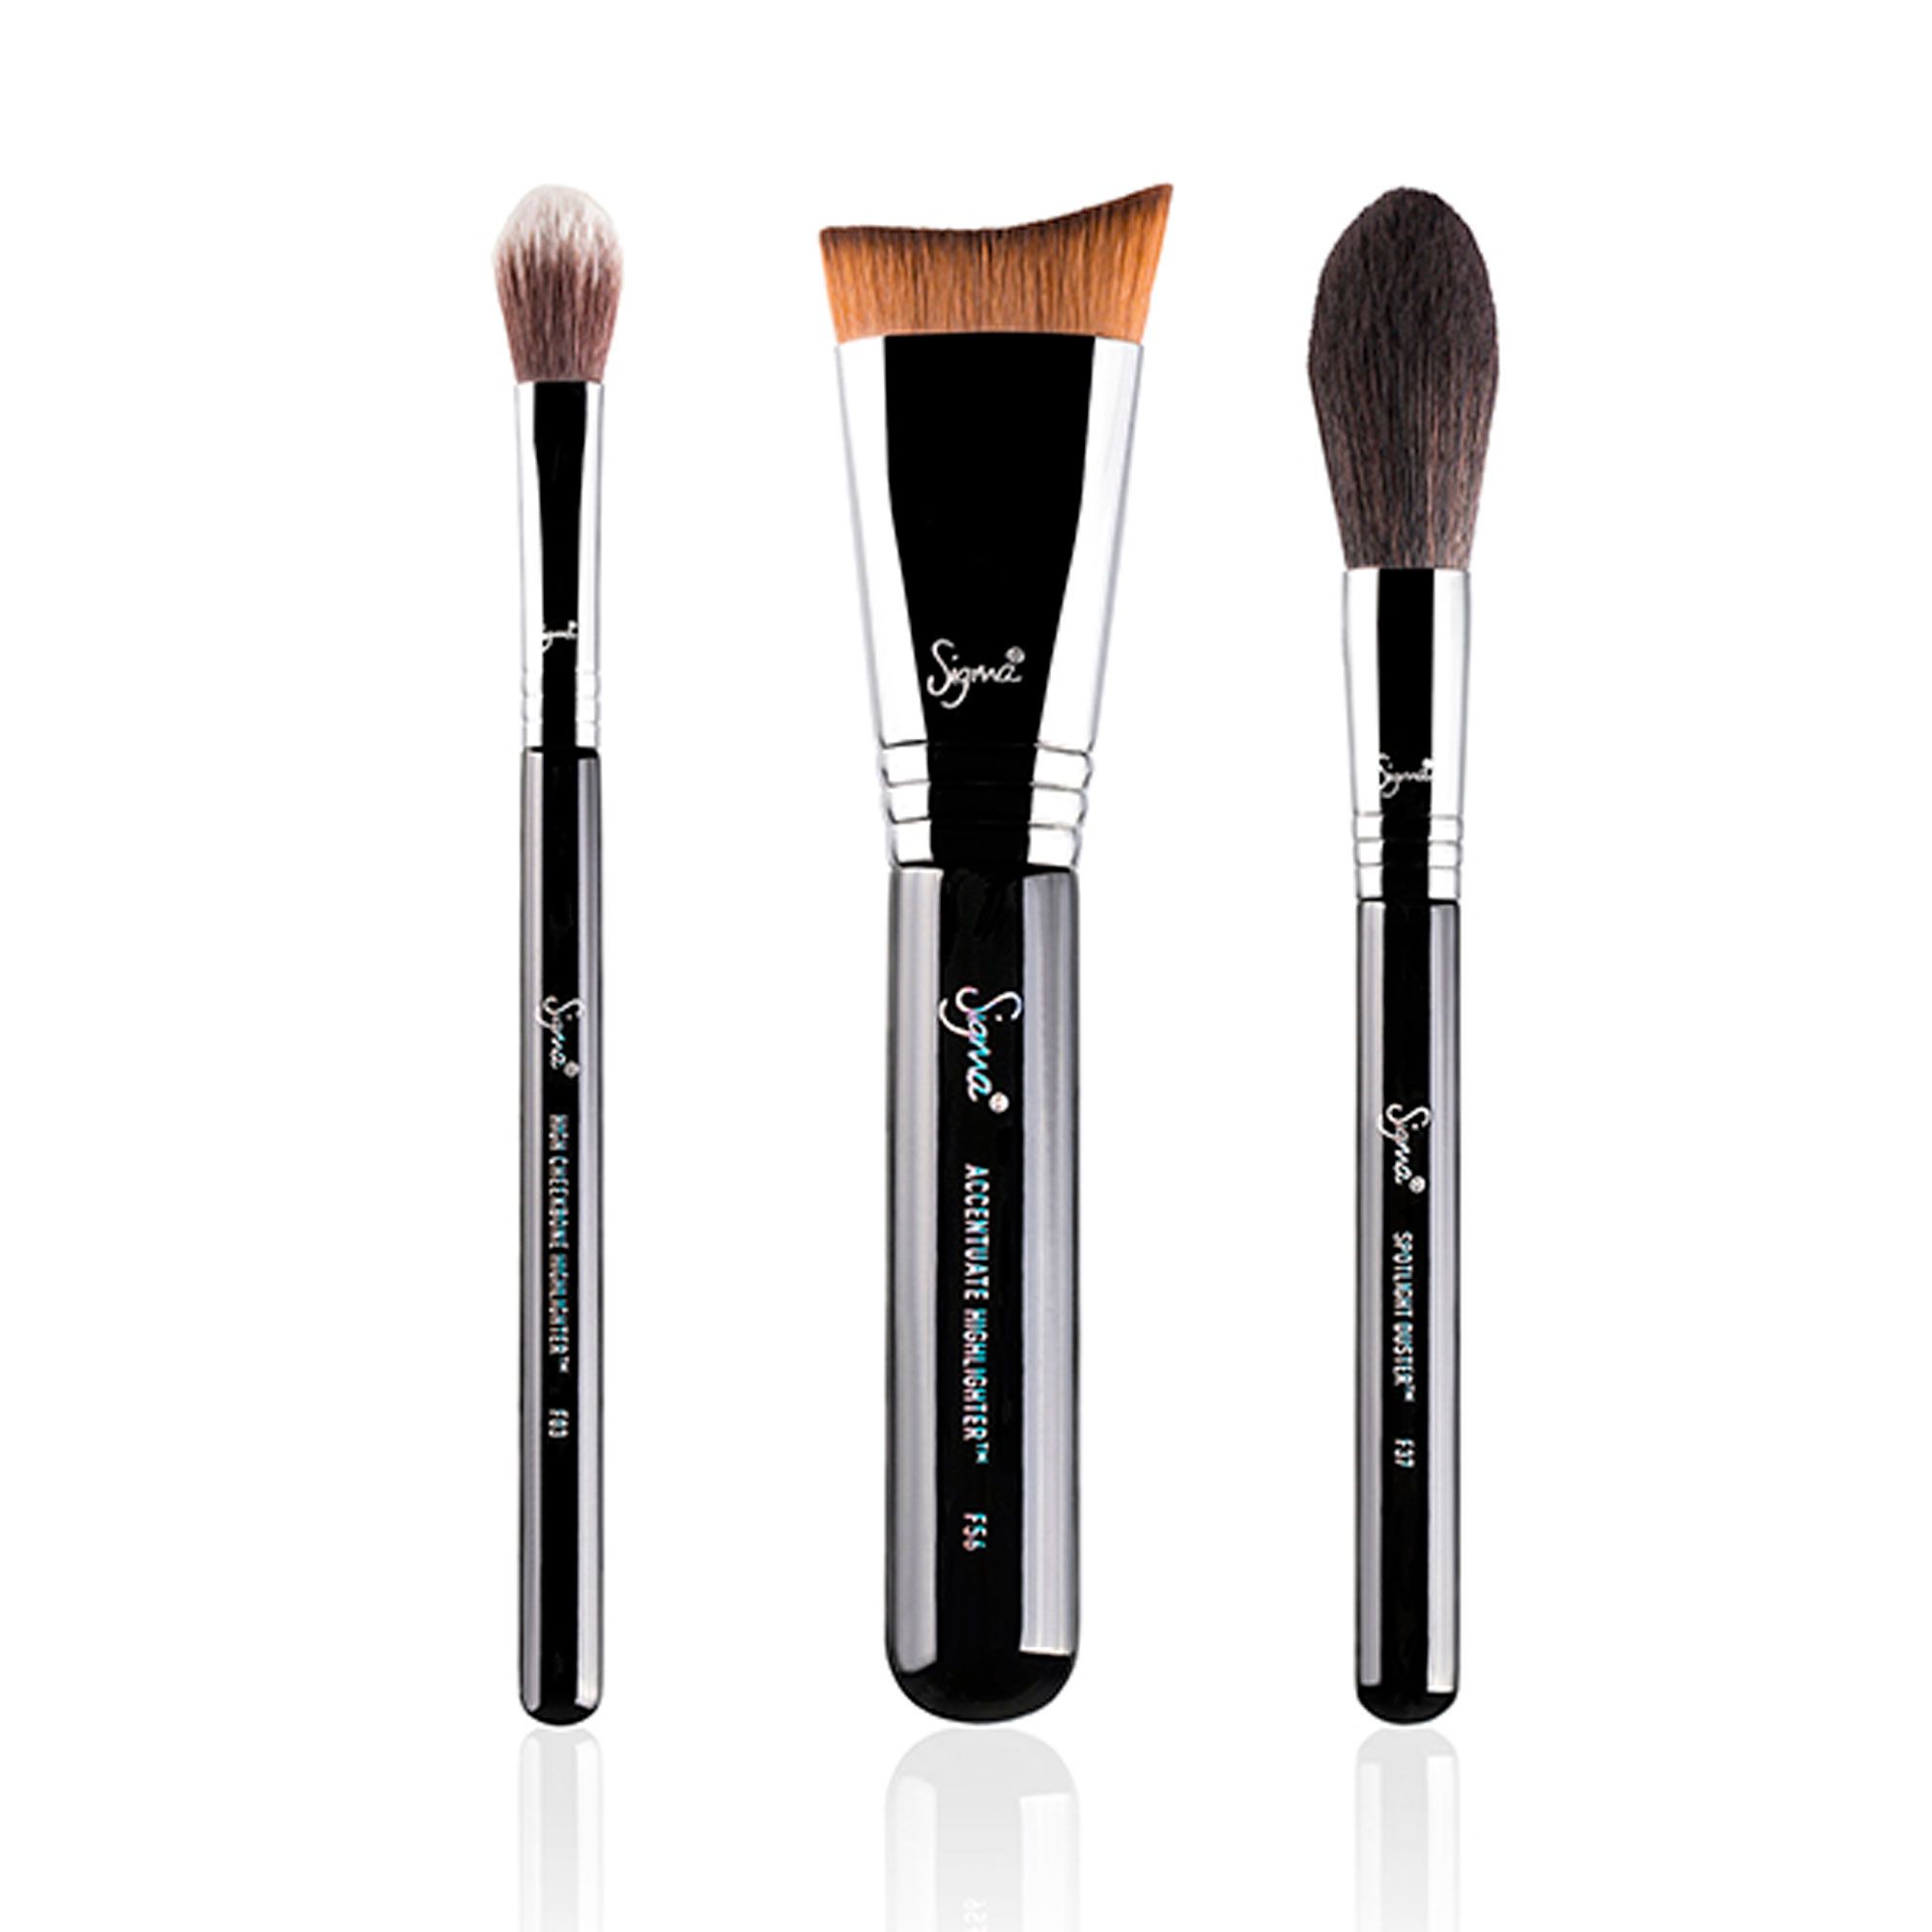 12 Best Makeup Brush Sets - Cute Makeup Brushes We Love